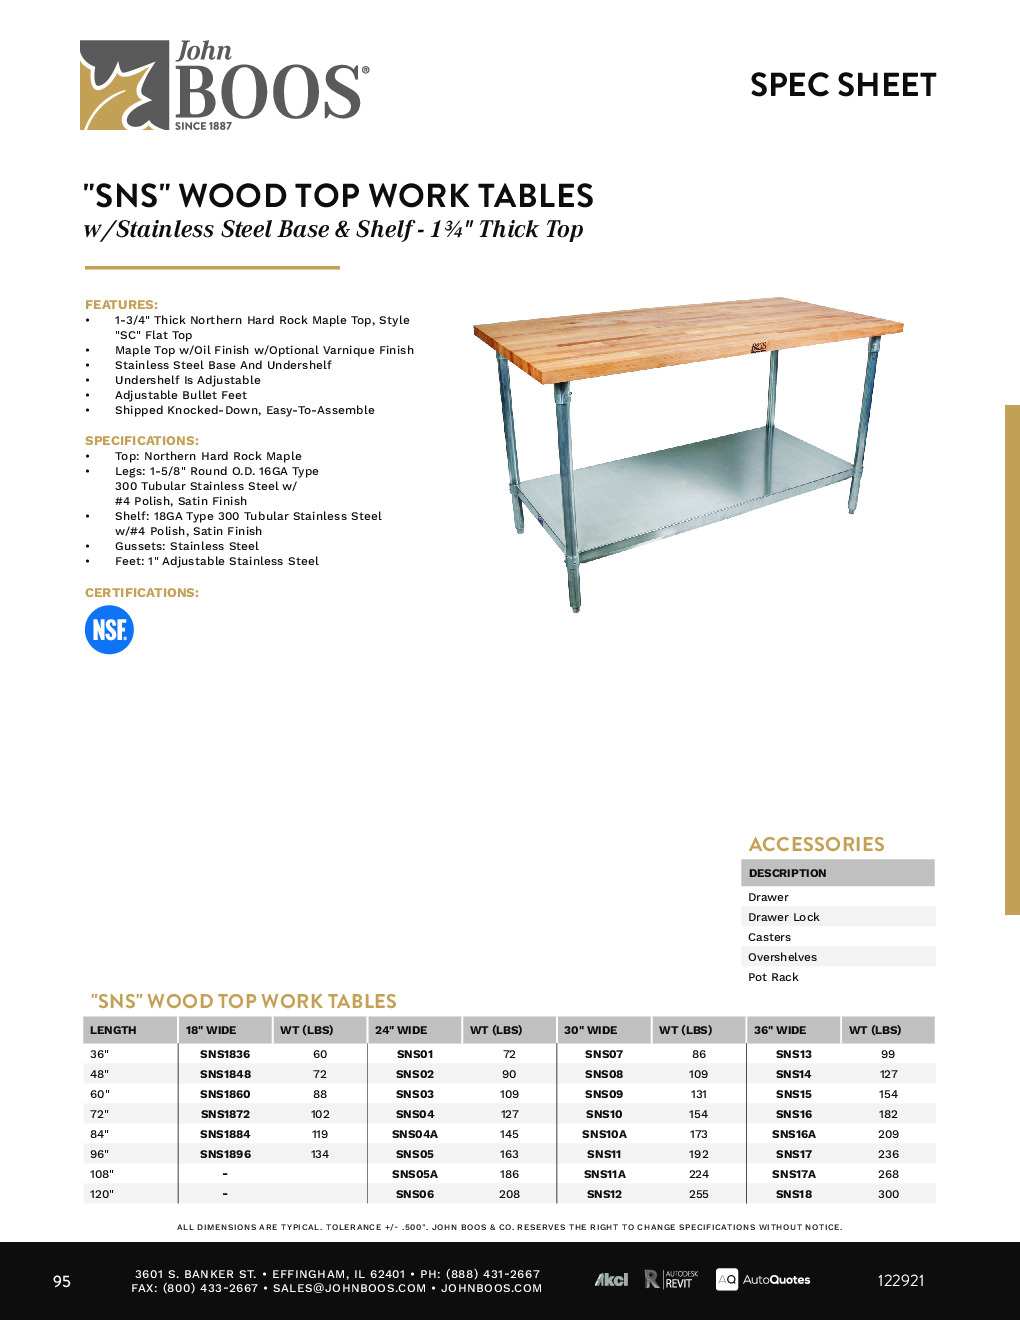 John Boos SNS03-X Wood Top Work Table